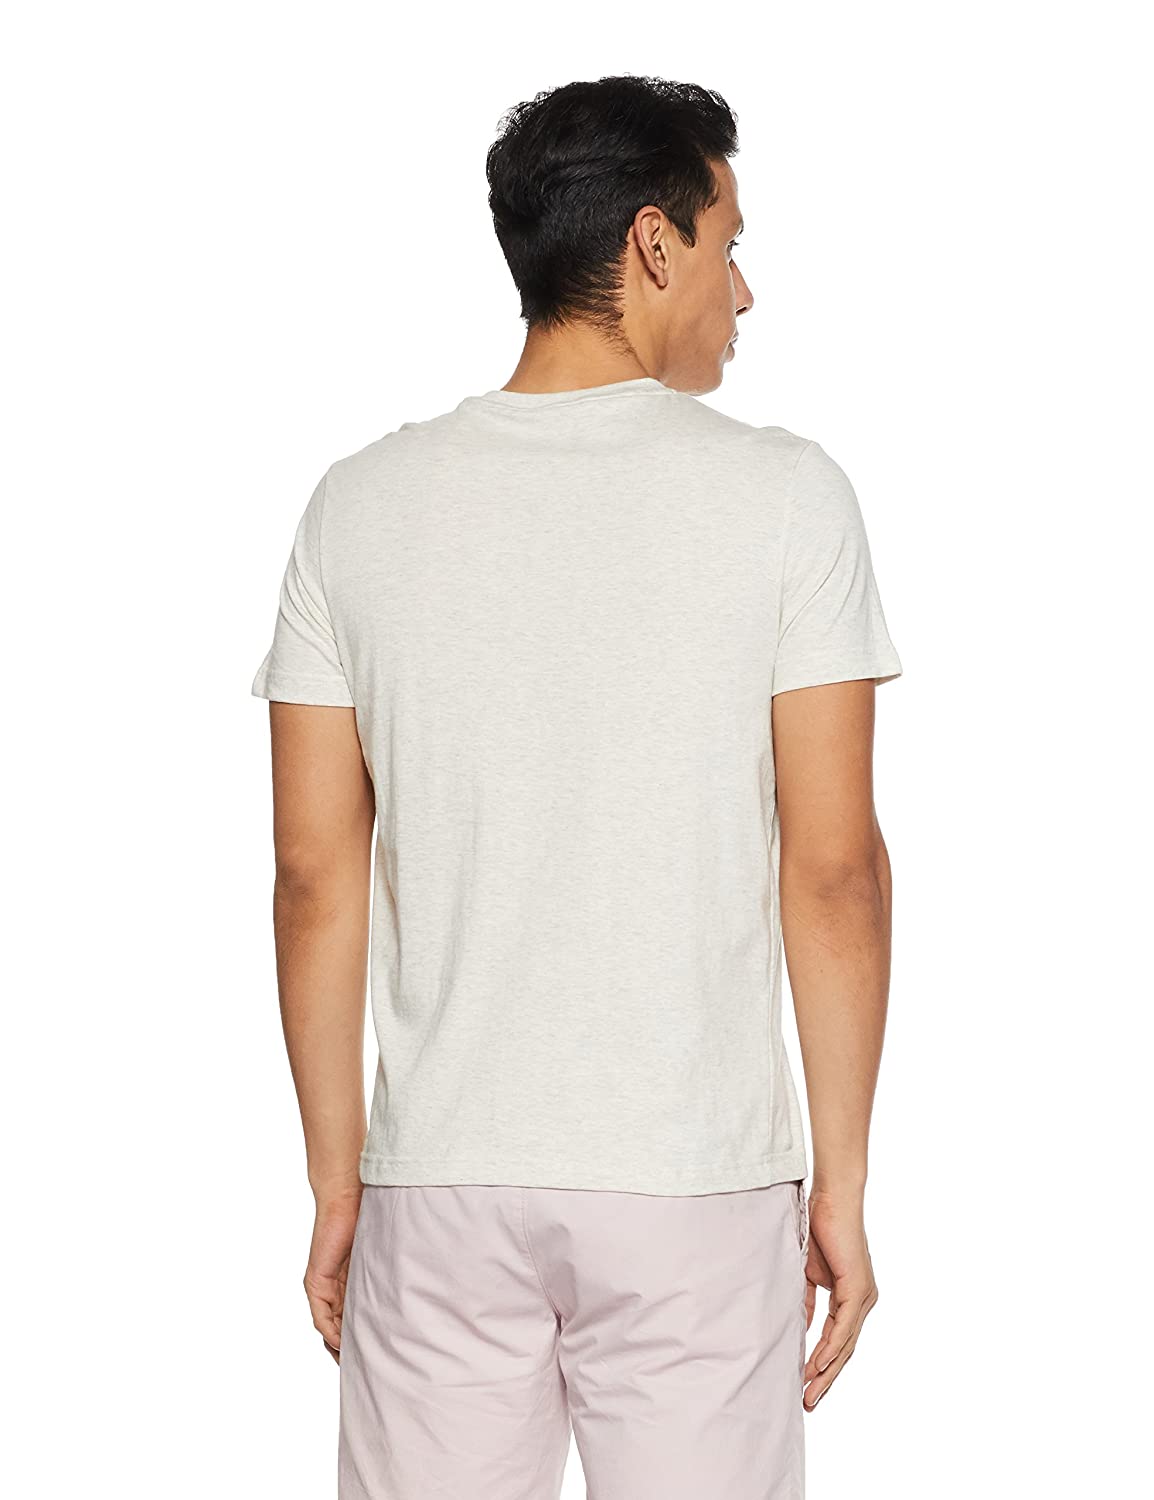 U.S. Polo Short Sleeve V-Neck T-Shirt Light Grey for Men - Stilento